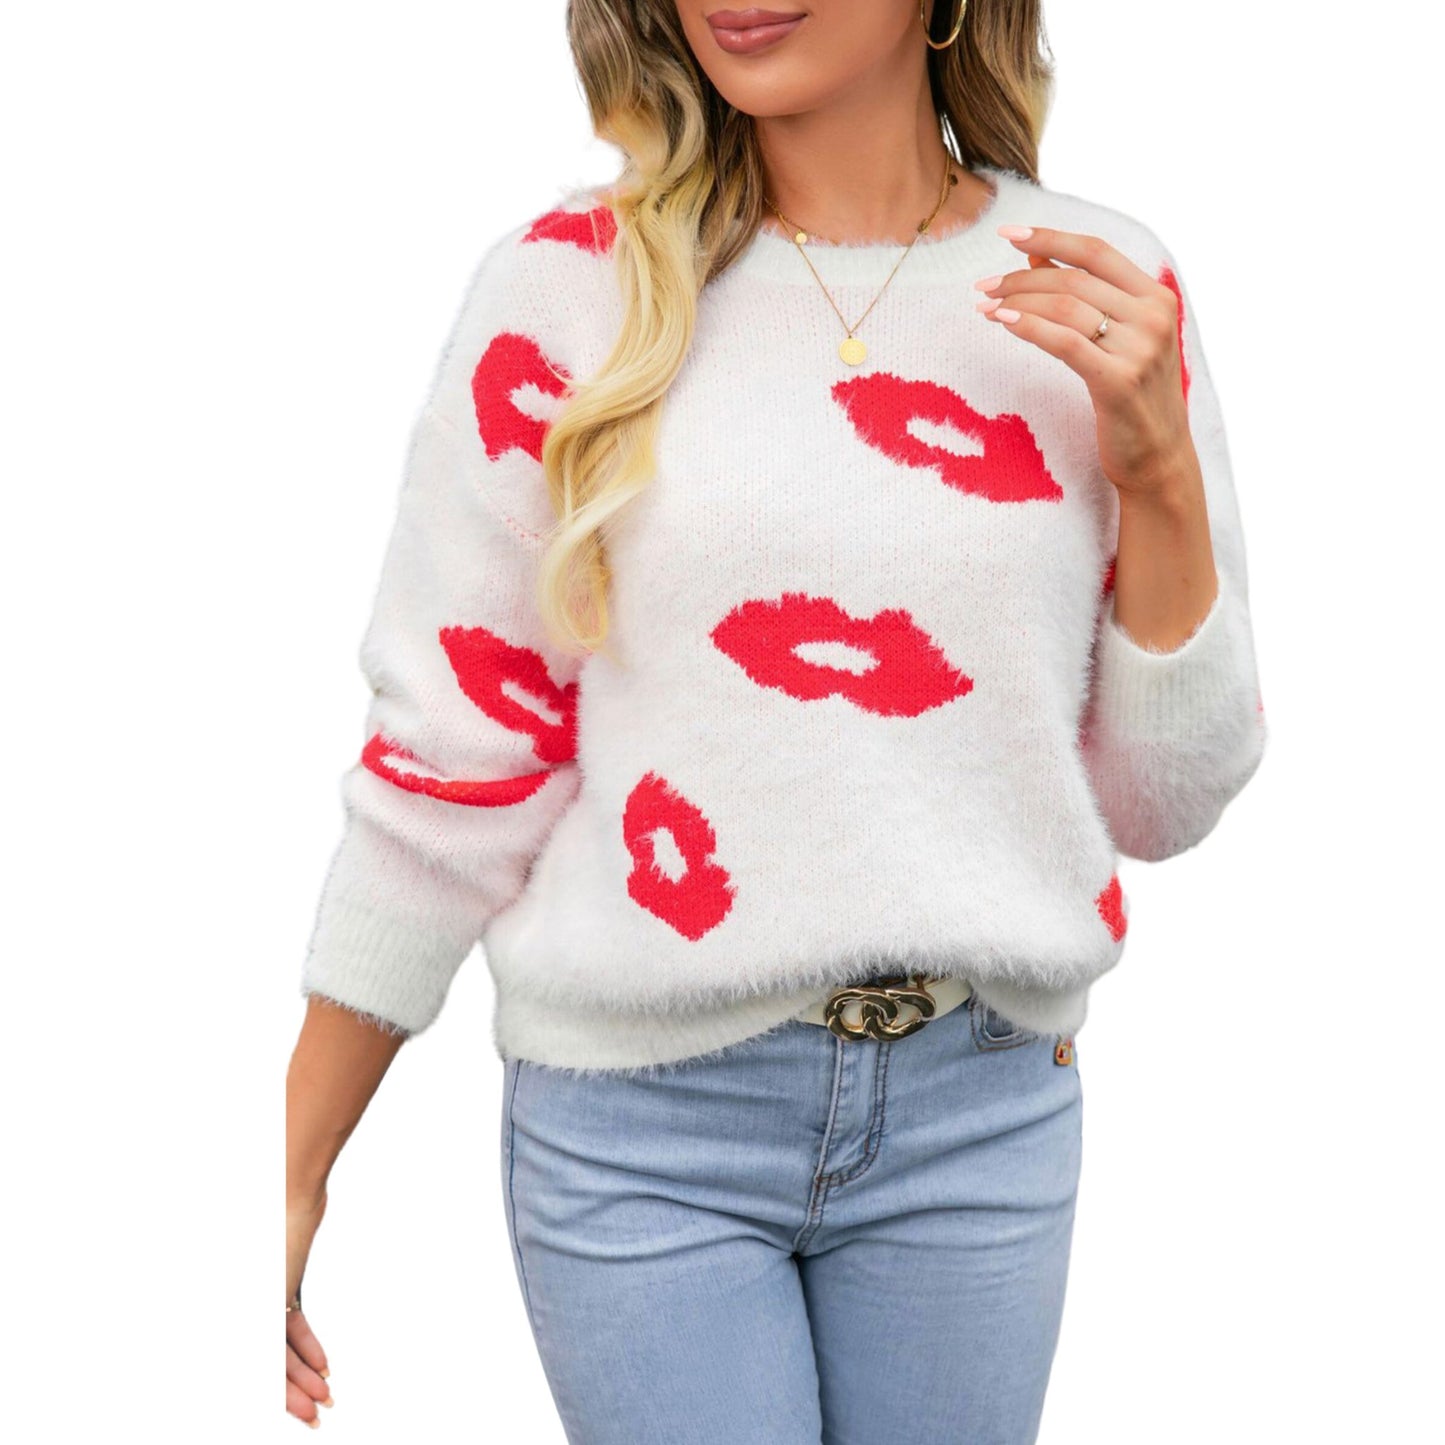 Kisses valentine’s sweater - Lavish life LLC 